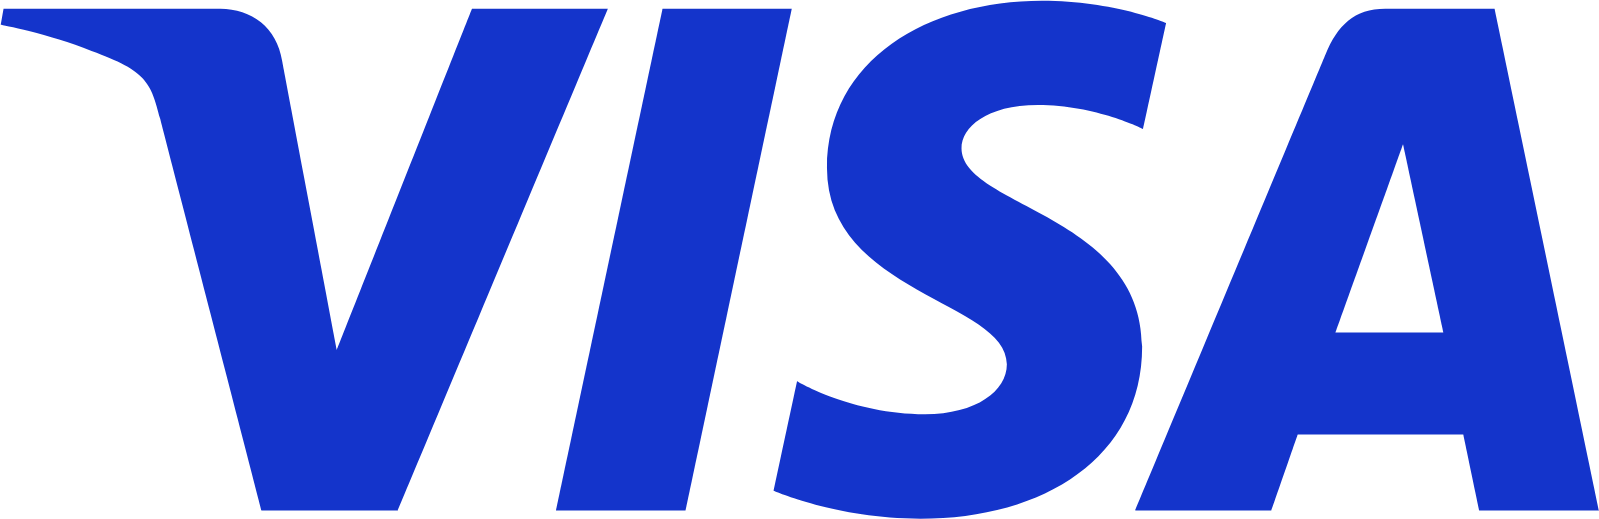 Visa logo (transparent PNG)